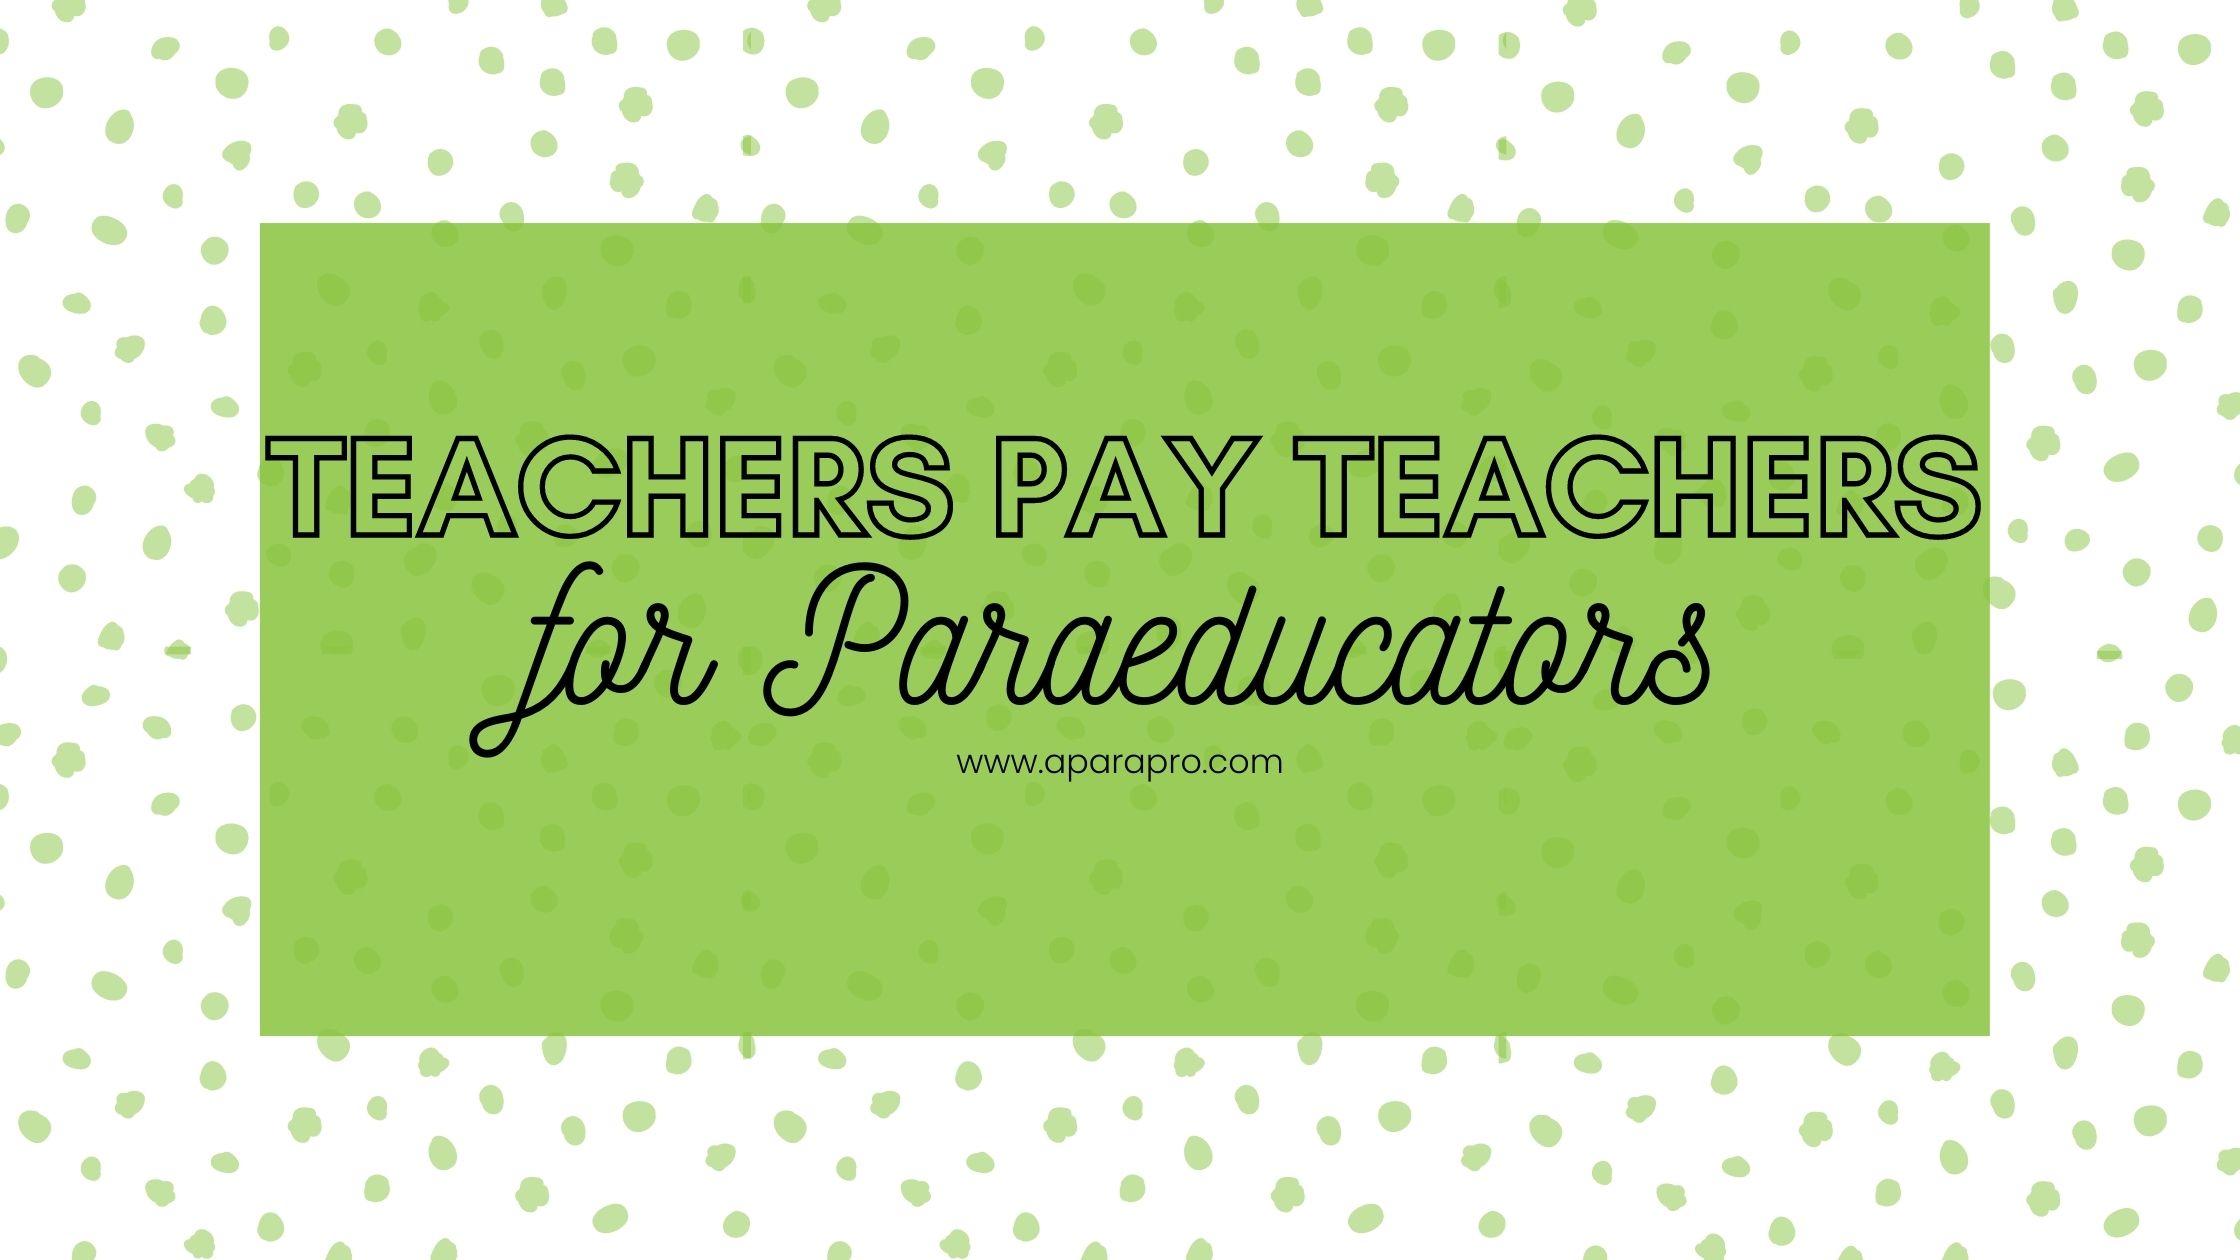 teachers pay teachers for paras - a para pro featured image